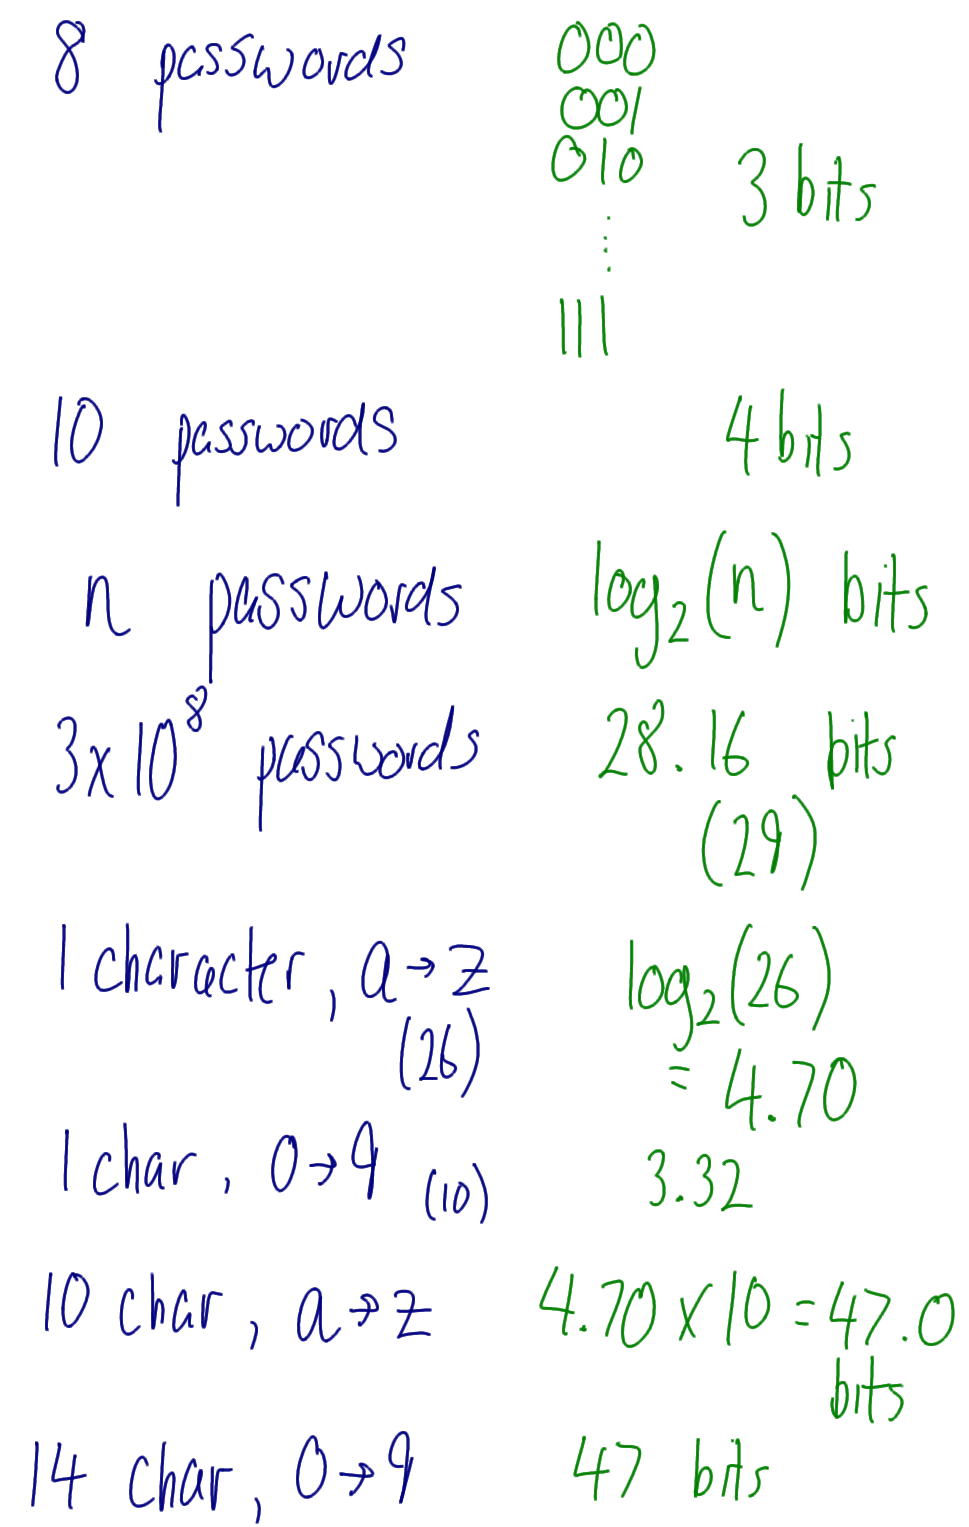 password entropy